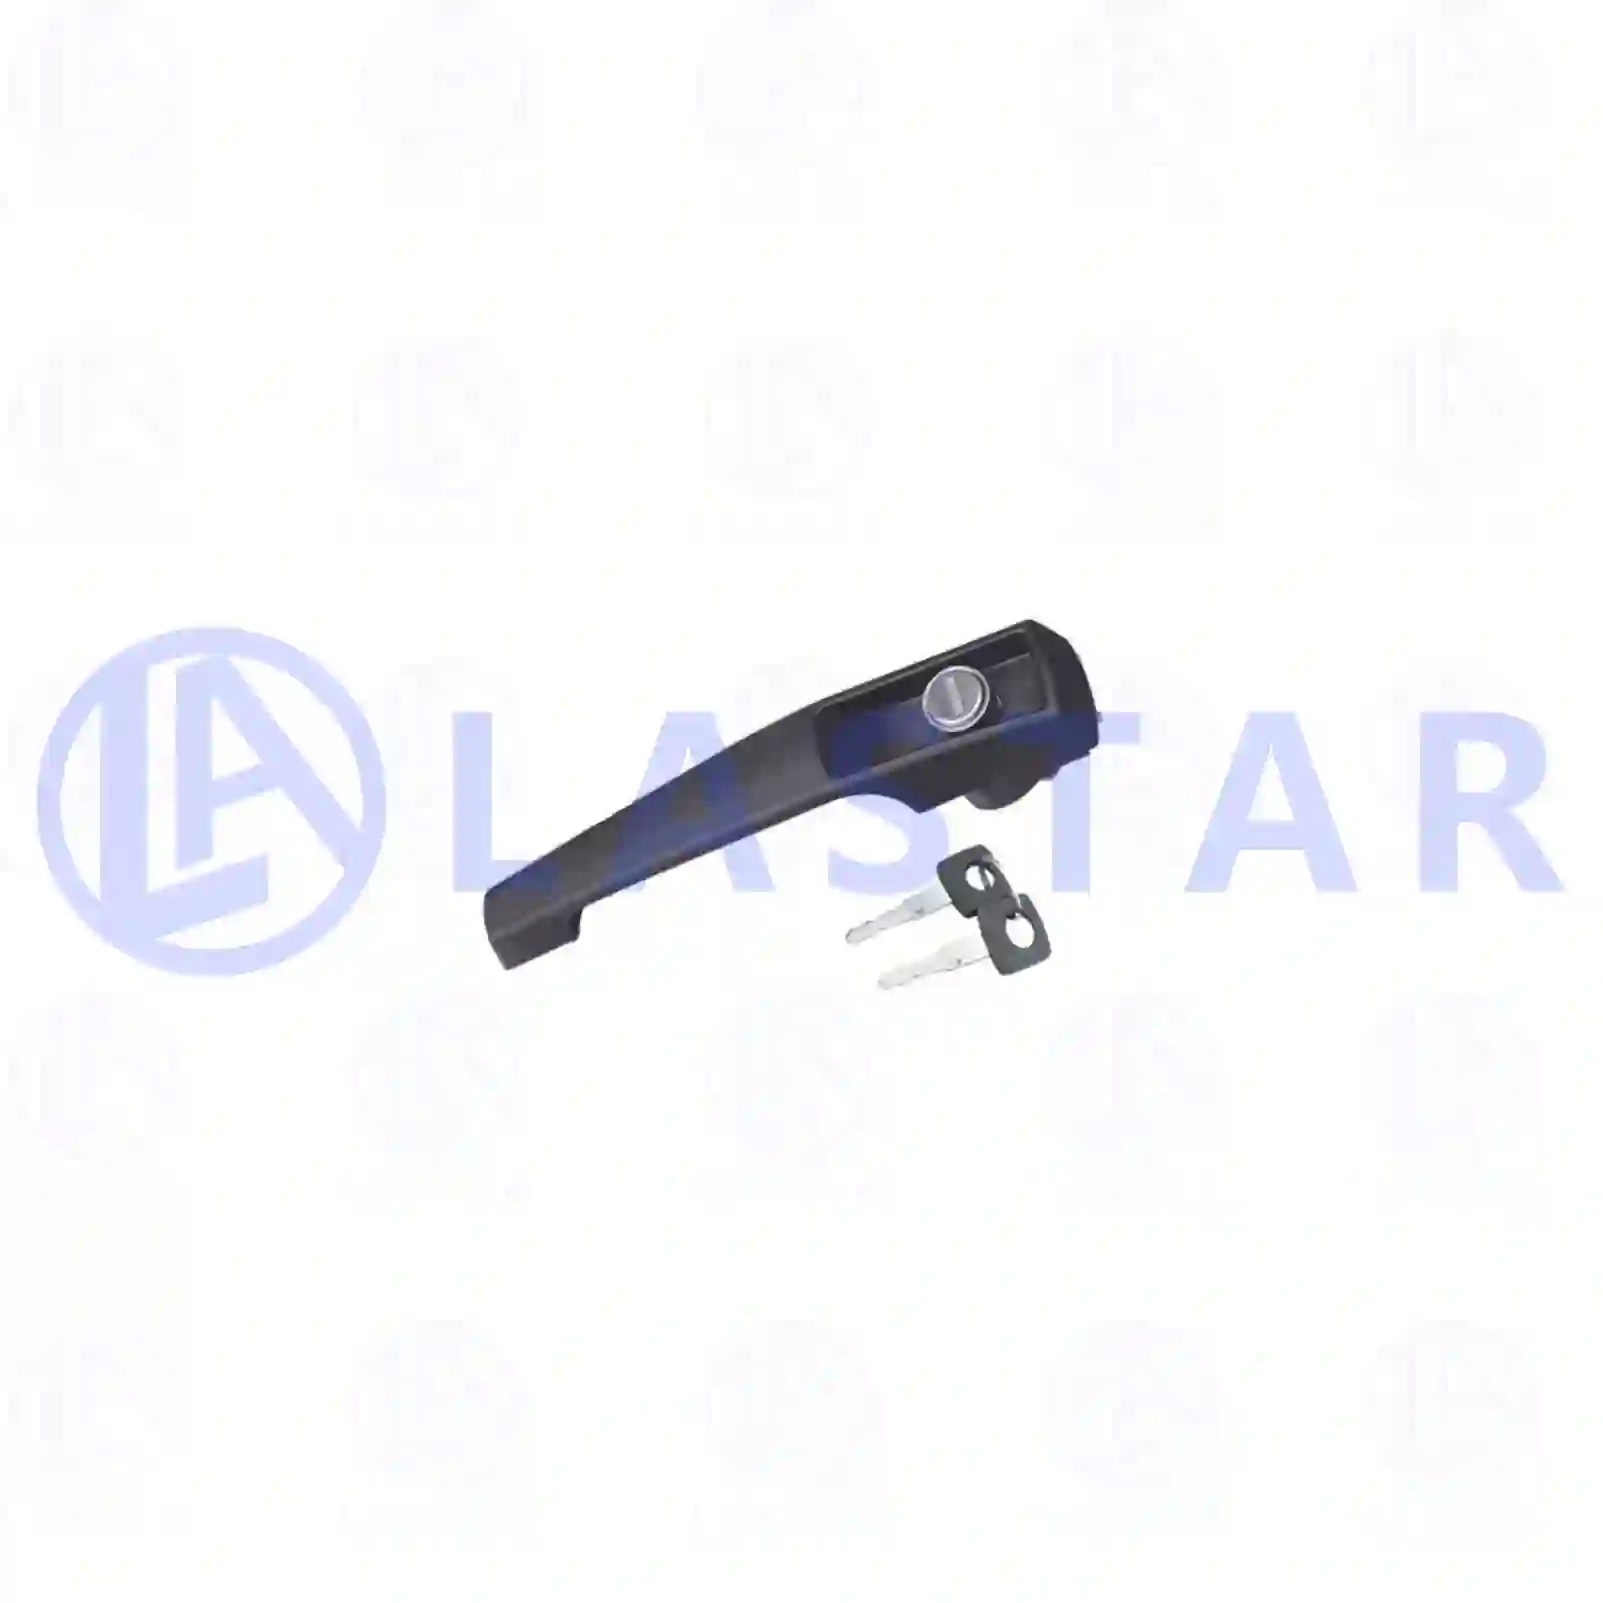  Door handle, plastic || Lastar Spare Part | Truck Spare Parts, Auotomotive Spare Parts